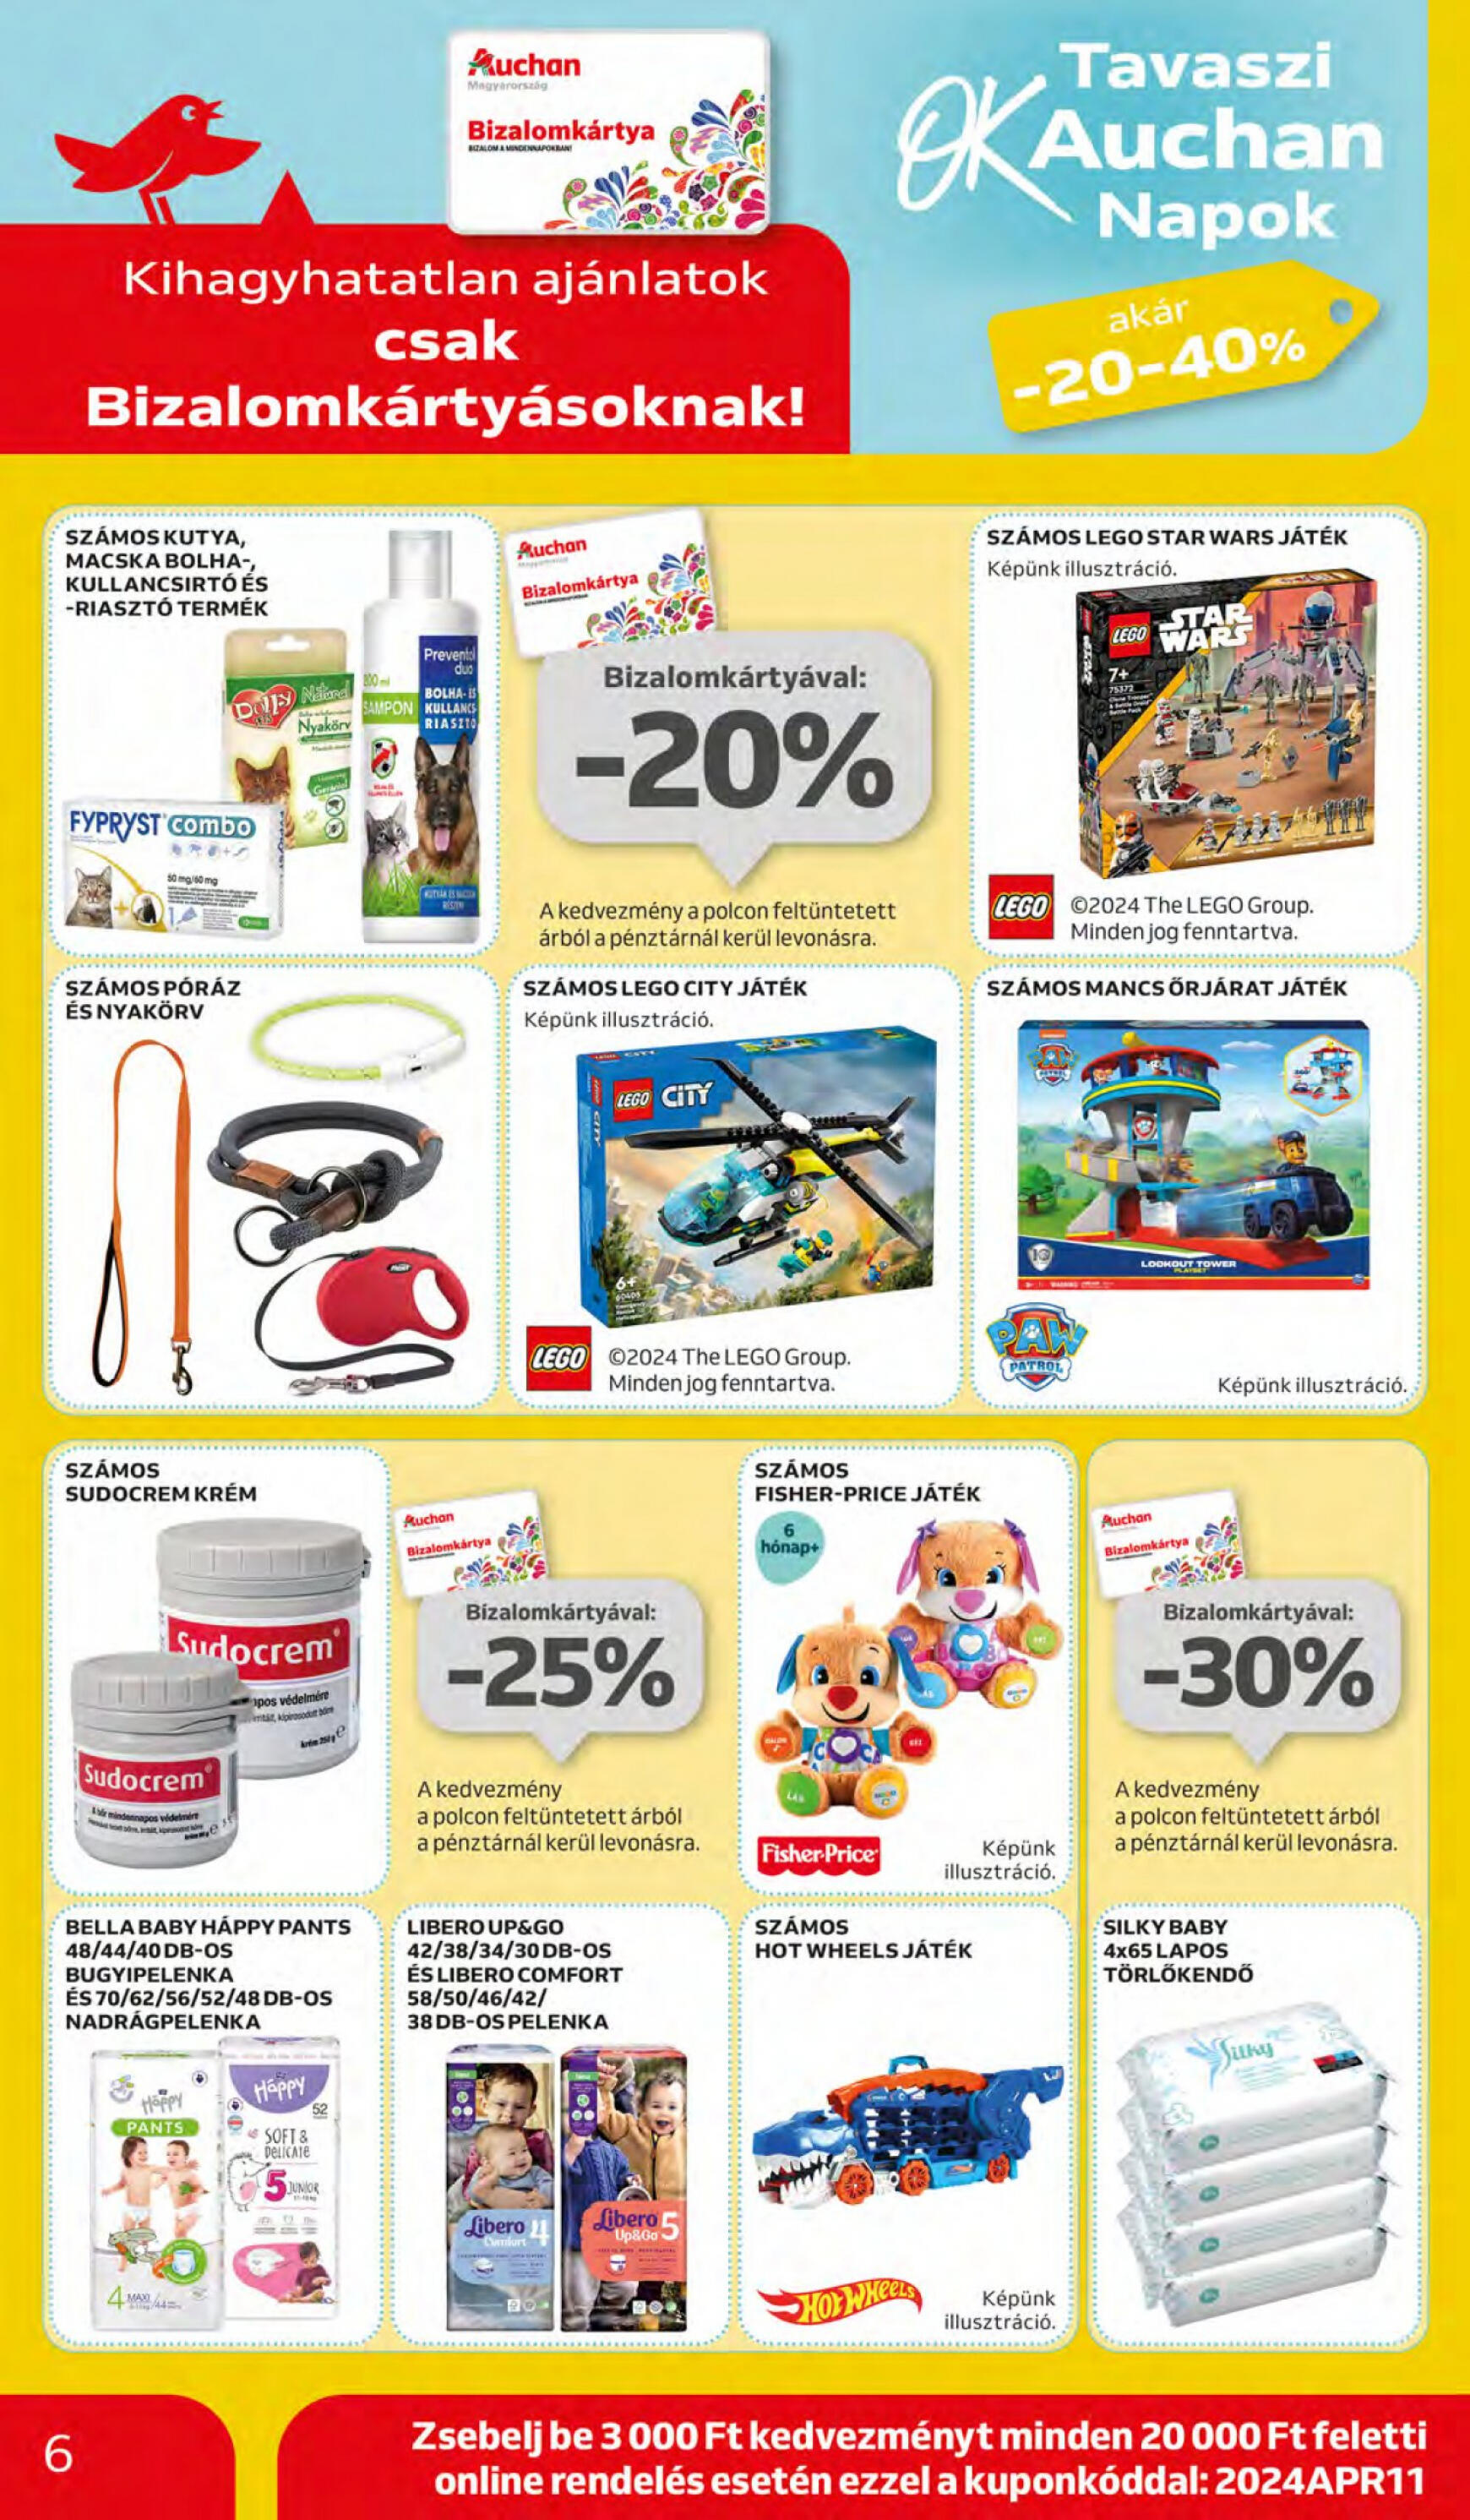 auchan - Aktuális újság Auchan 04.11. - 04.17. - page: 6